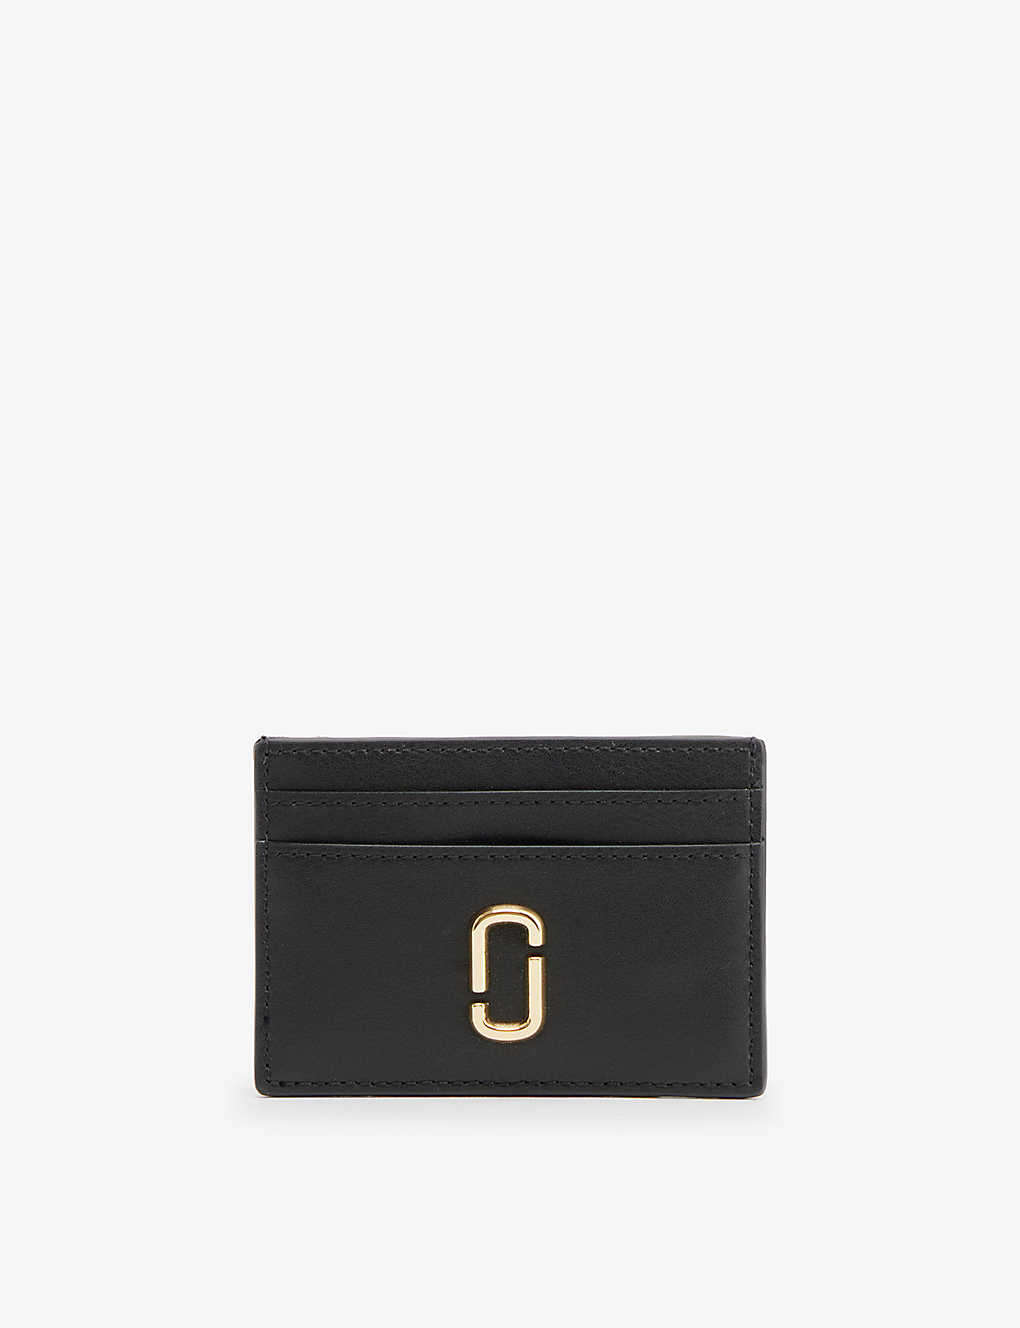 Marc Jacobs Womens Black Branded Leather Cardholder